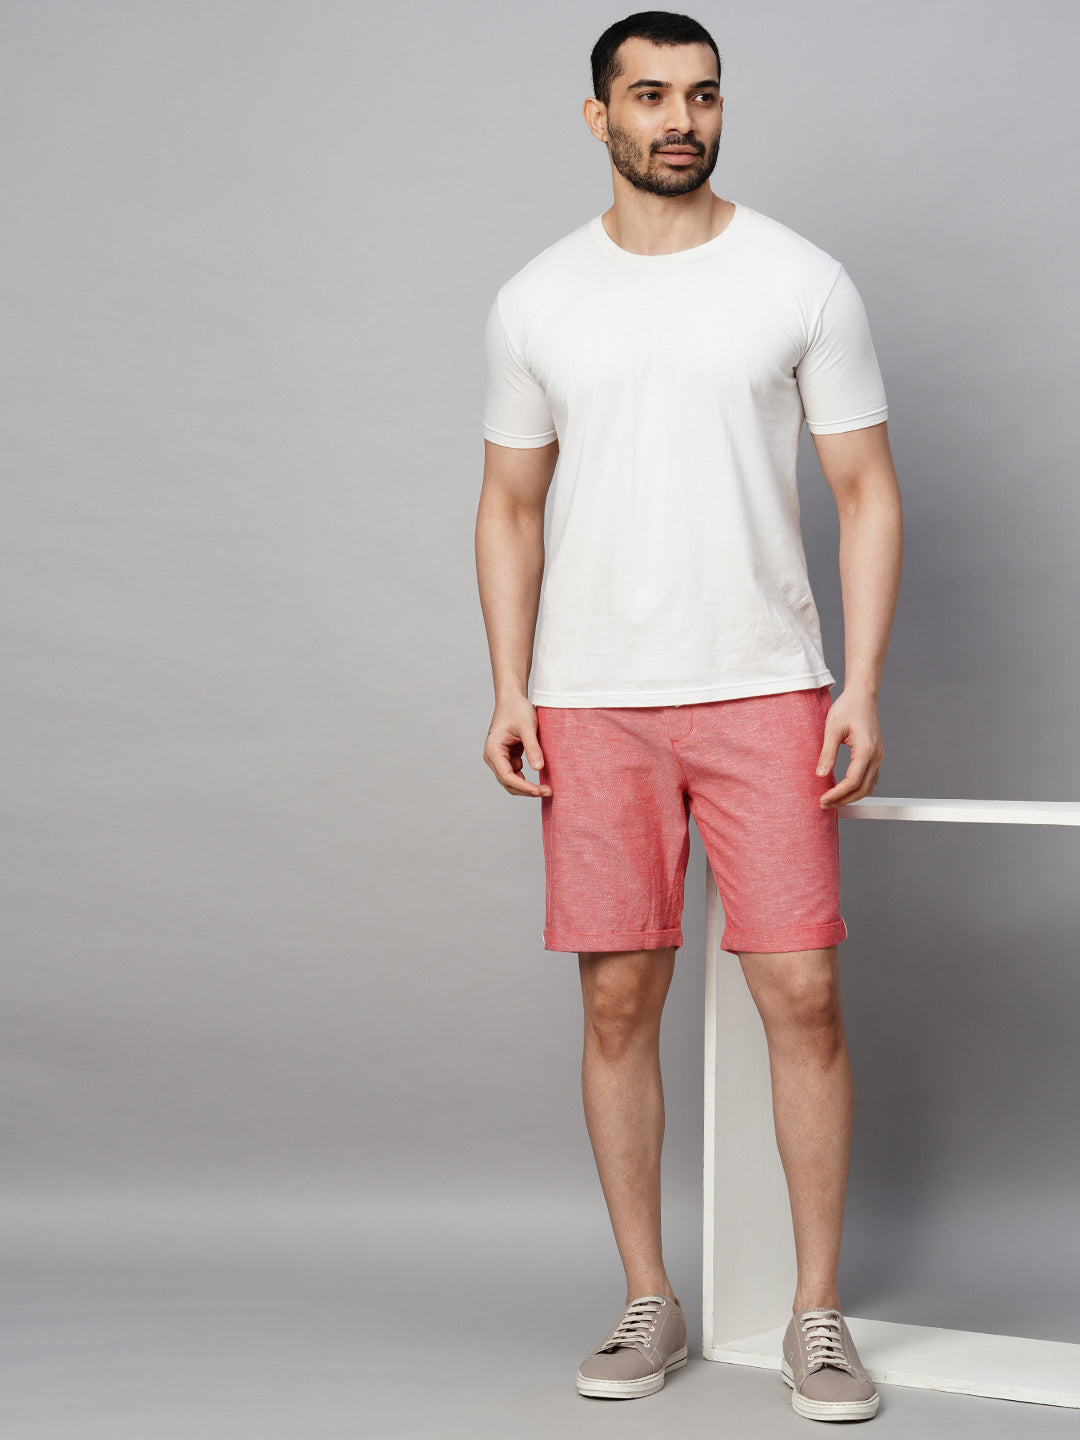 Men's Cotton Linen Red Regular Fit Shorts